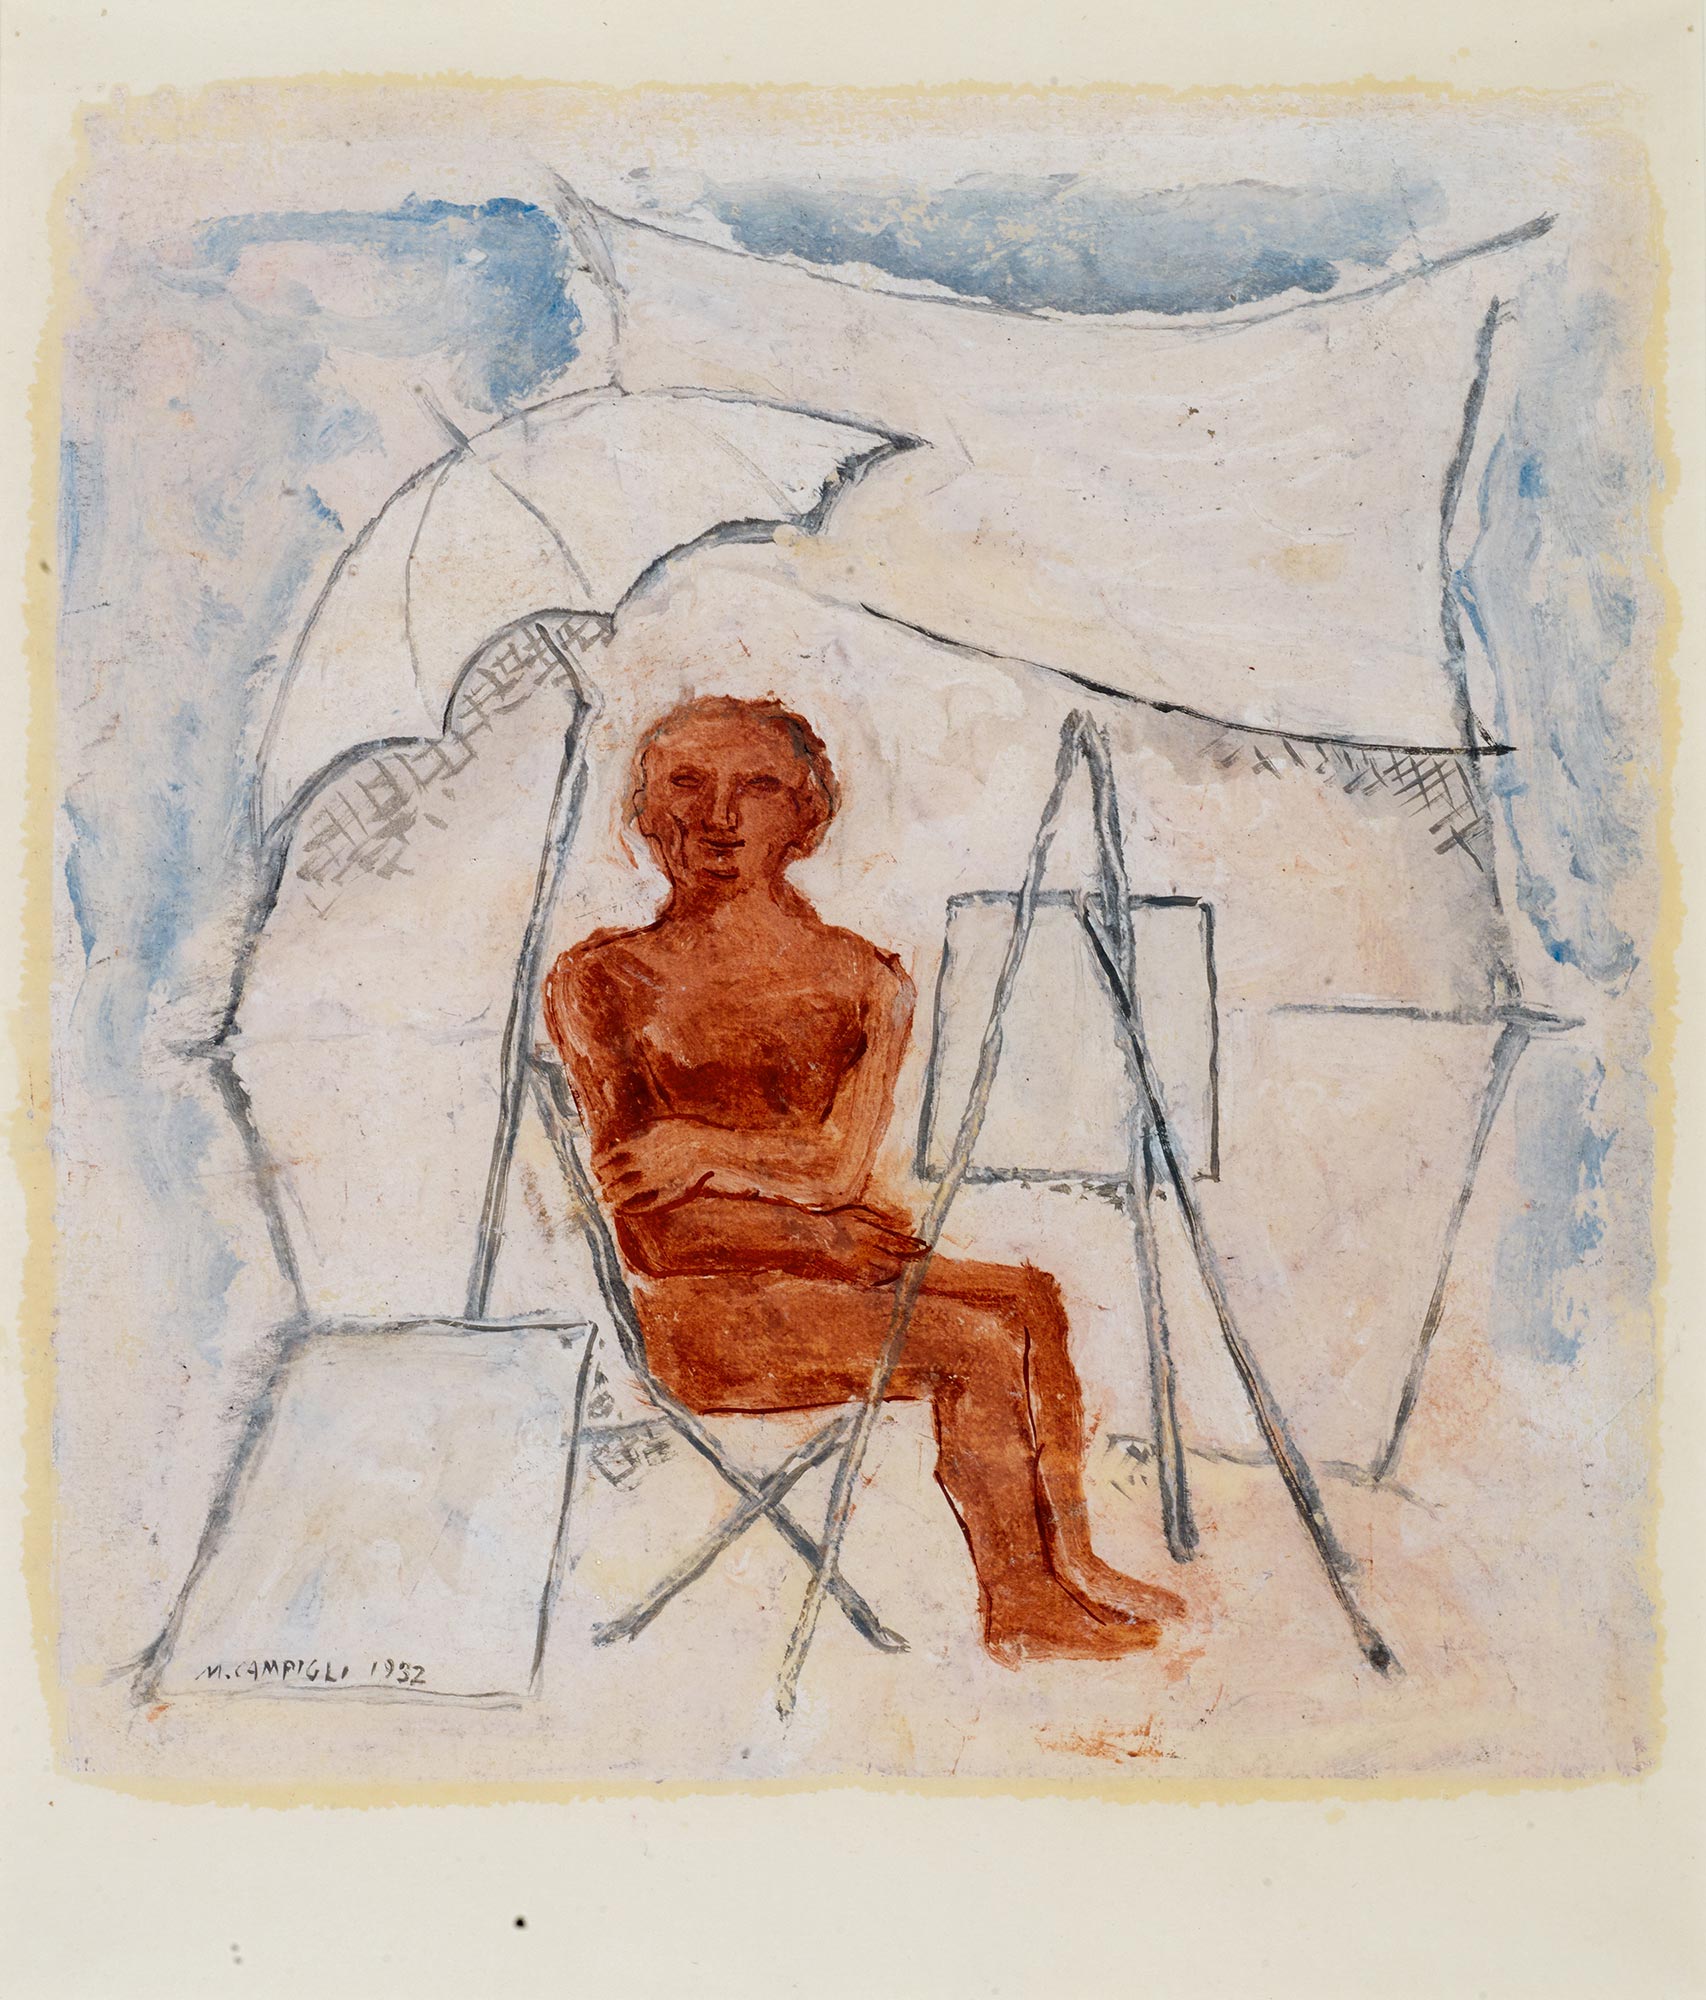 Massimo Campigli, The Painter, 1932